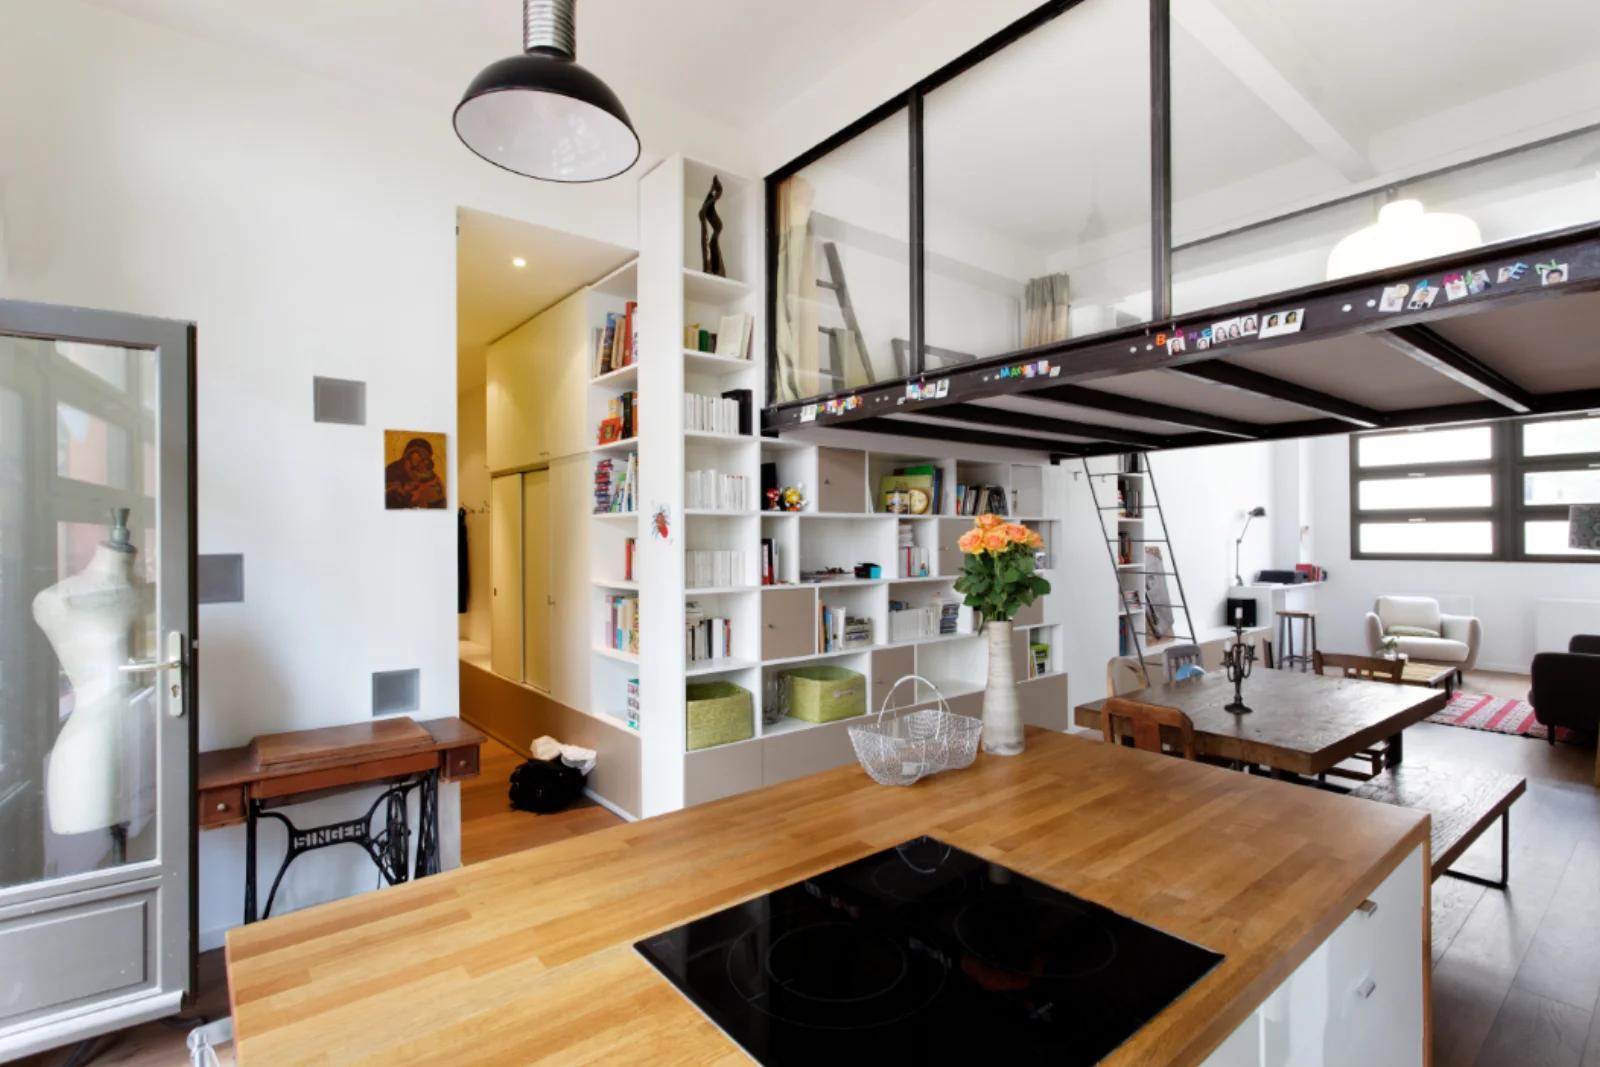 Kitchen in 6 bedrooms | terrace | architect's loft - 1